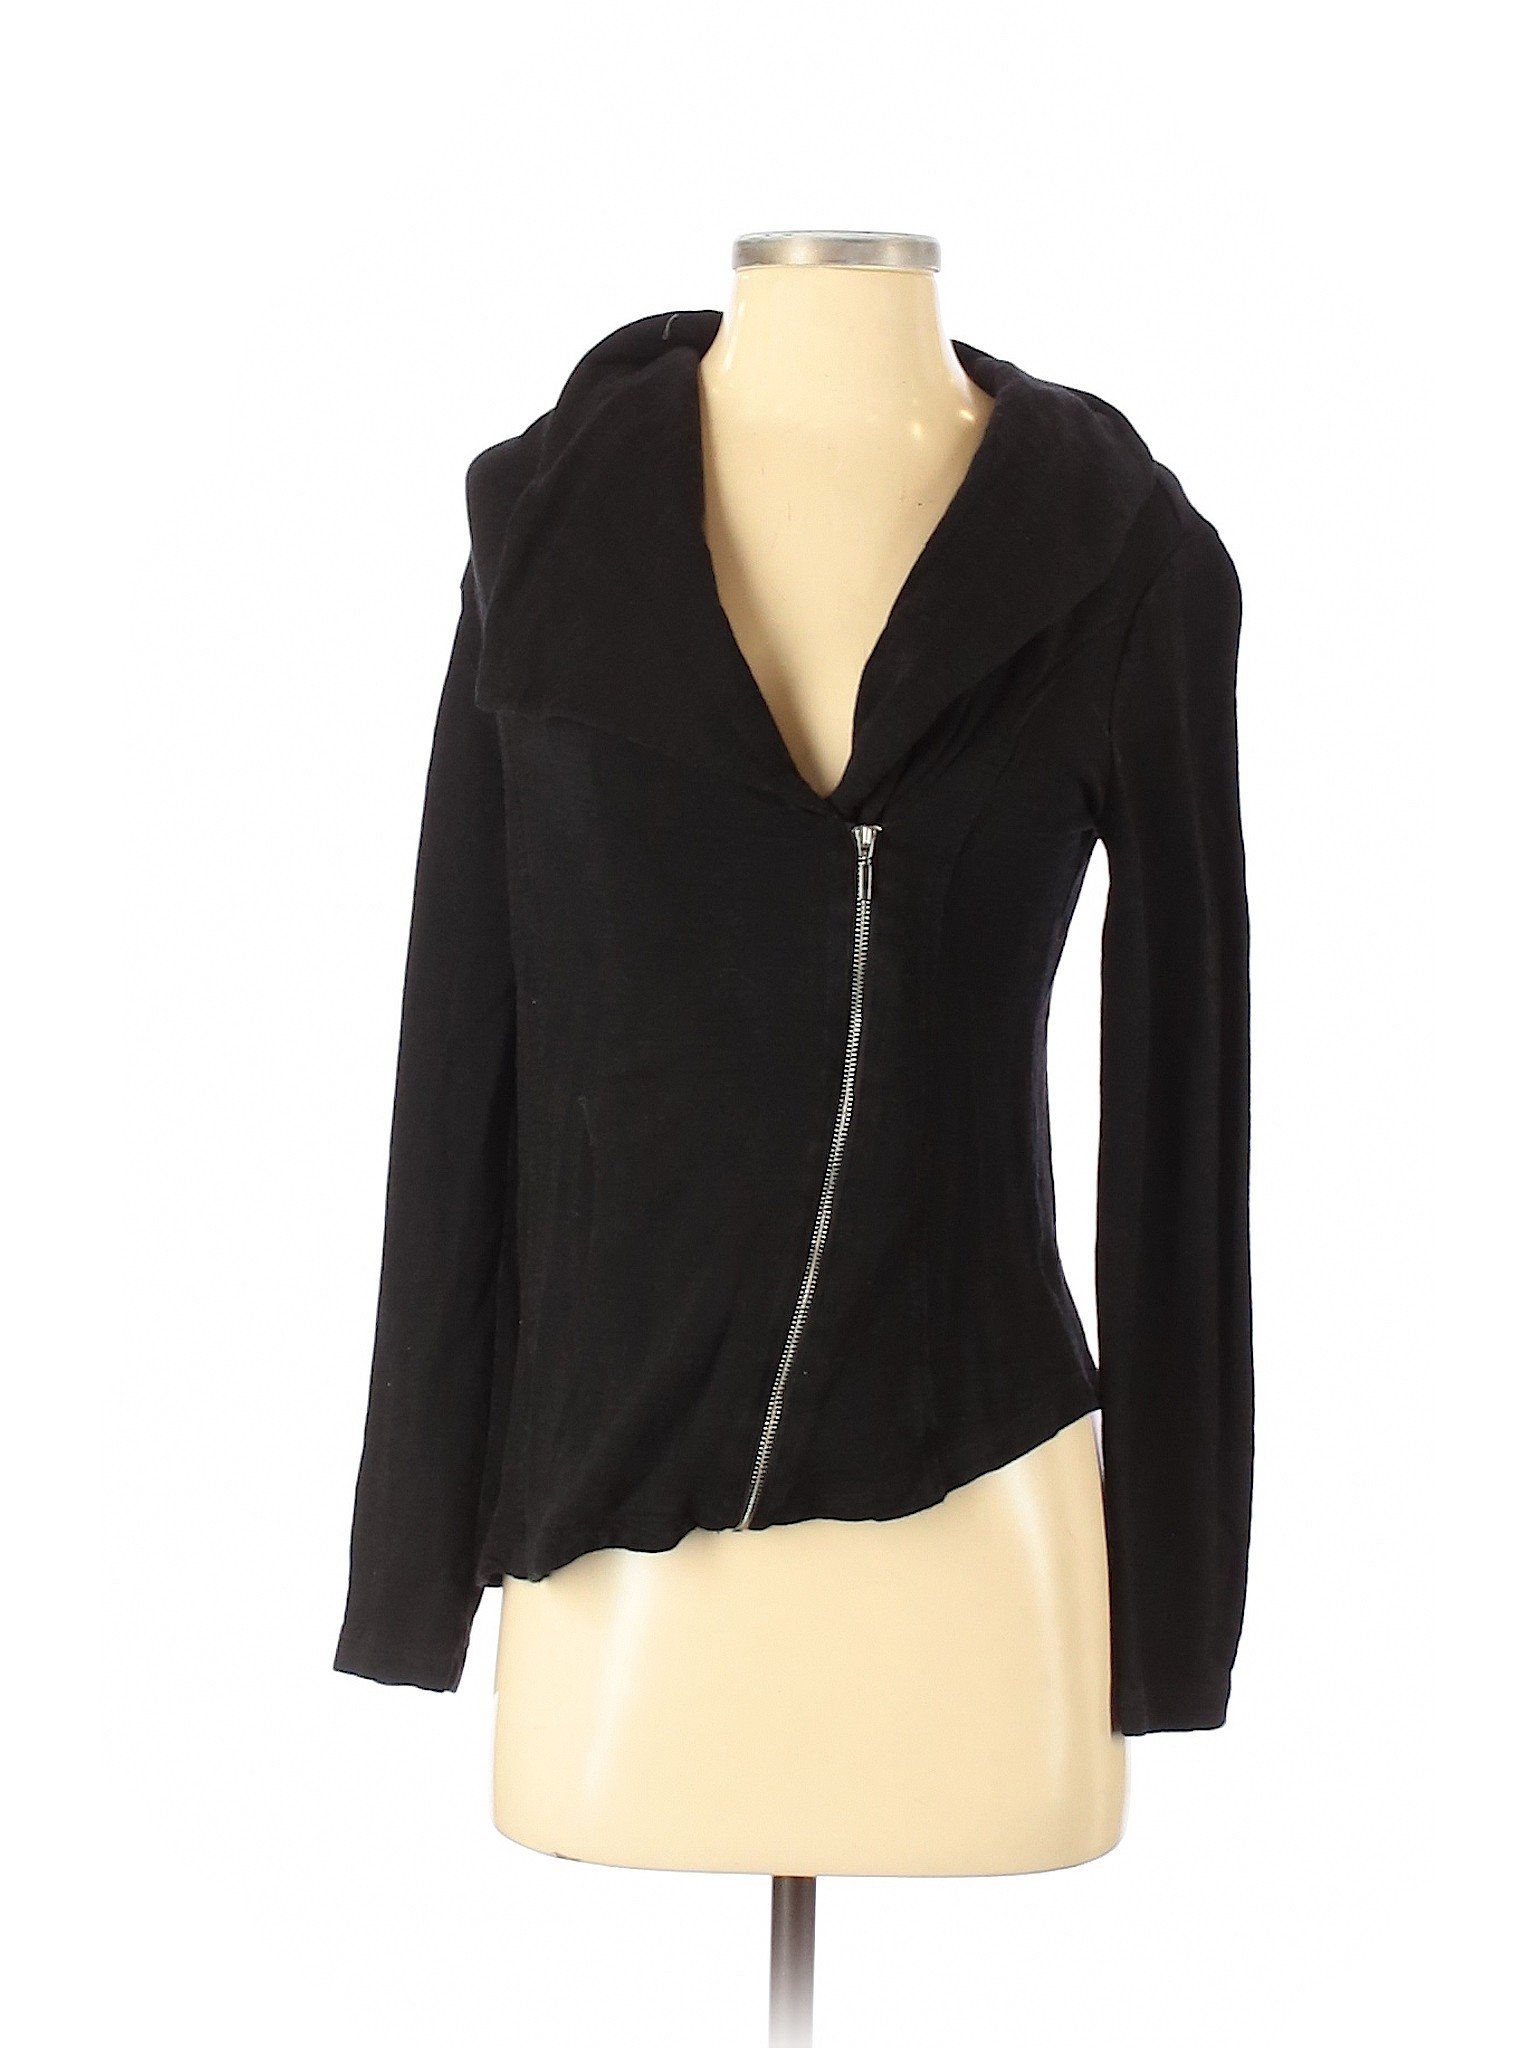 Mossimo Women Black Jacket XS | eBay